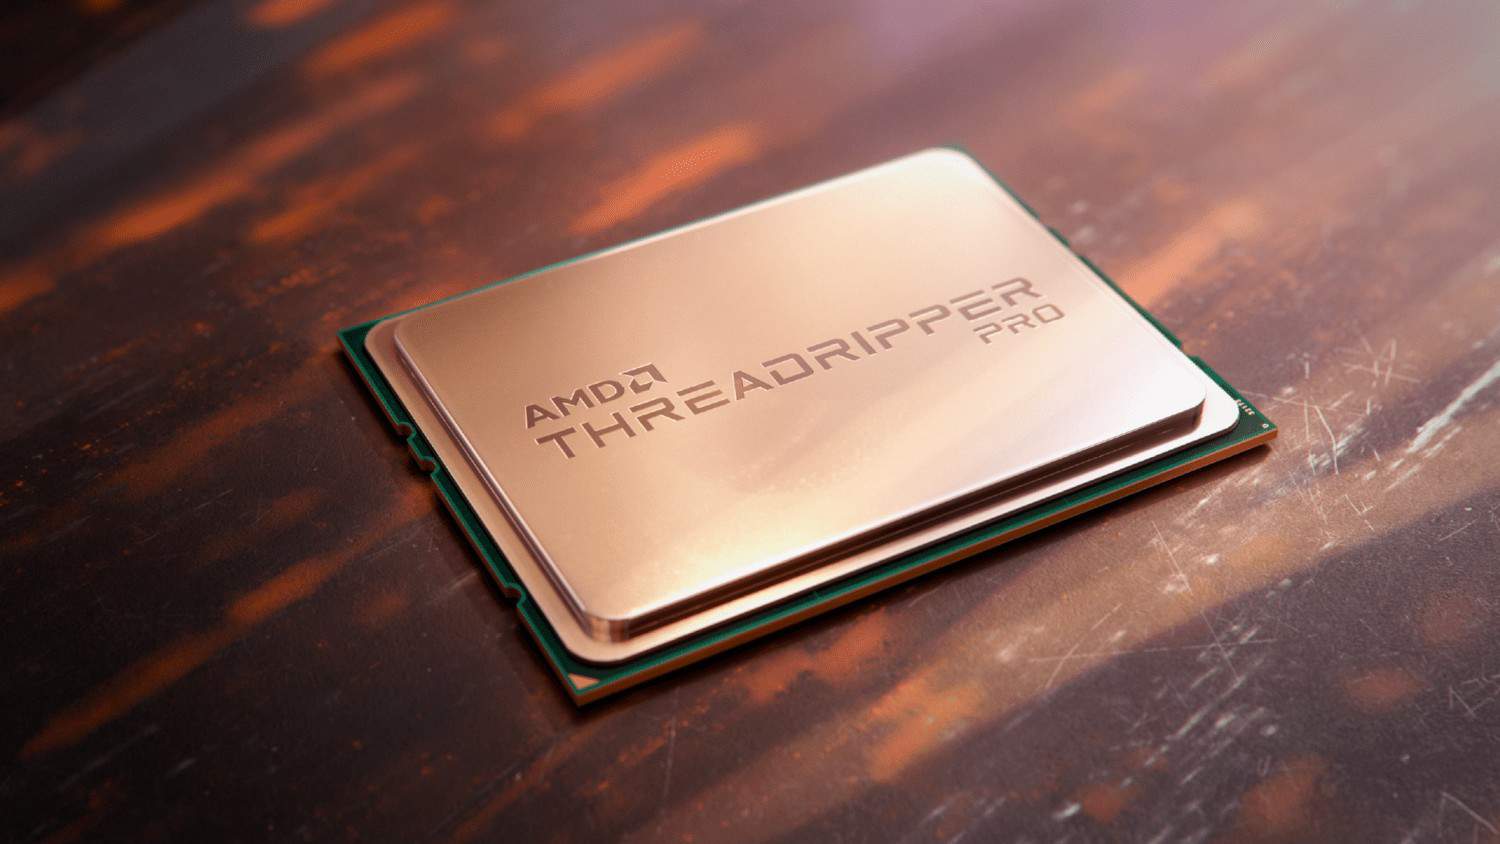 AMD Threadripper image